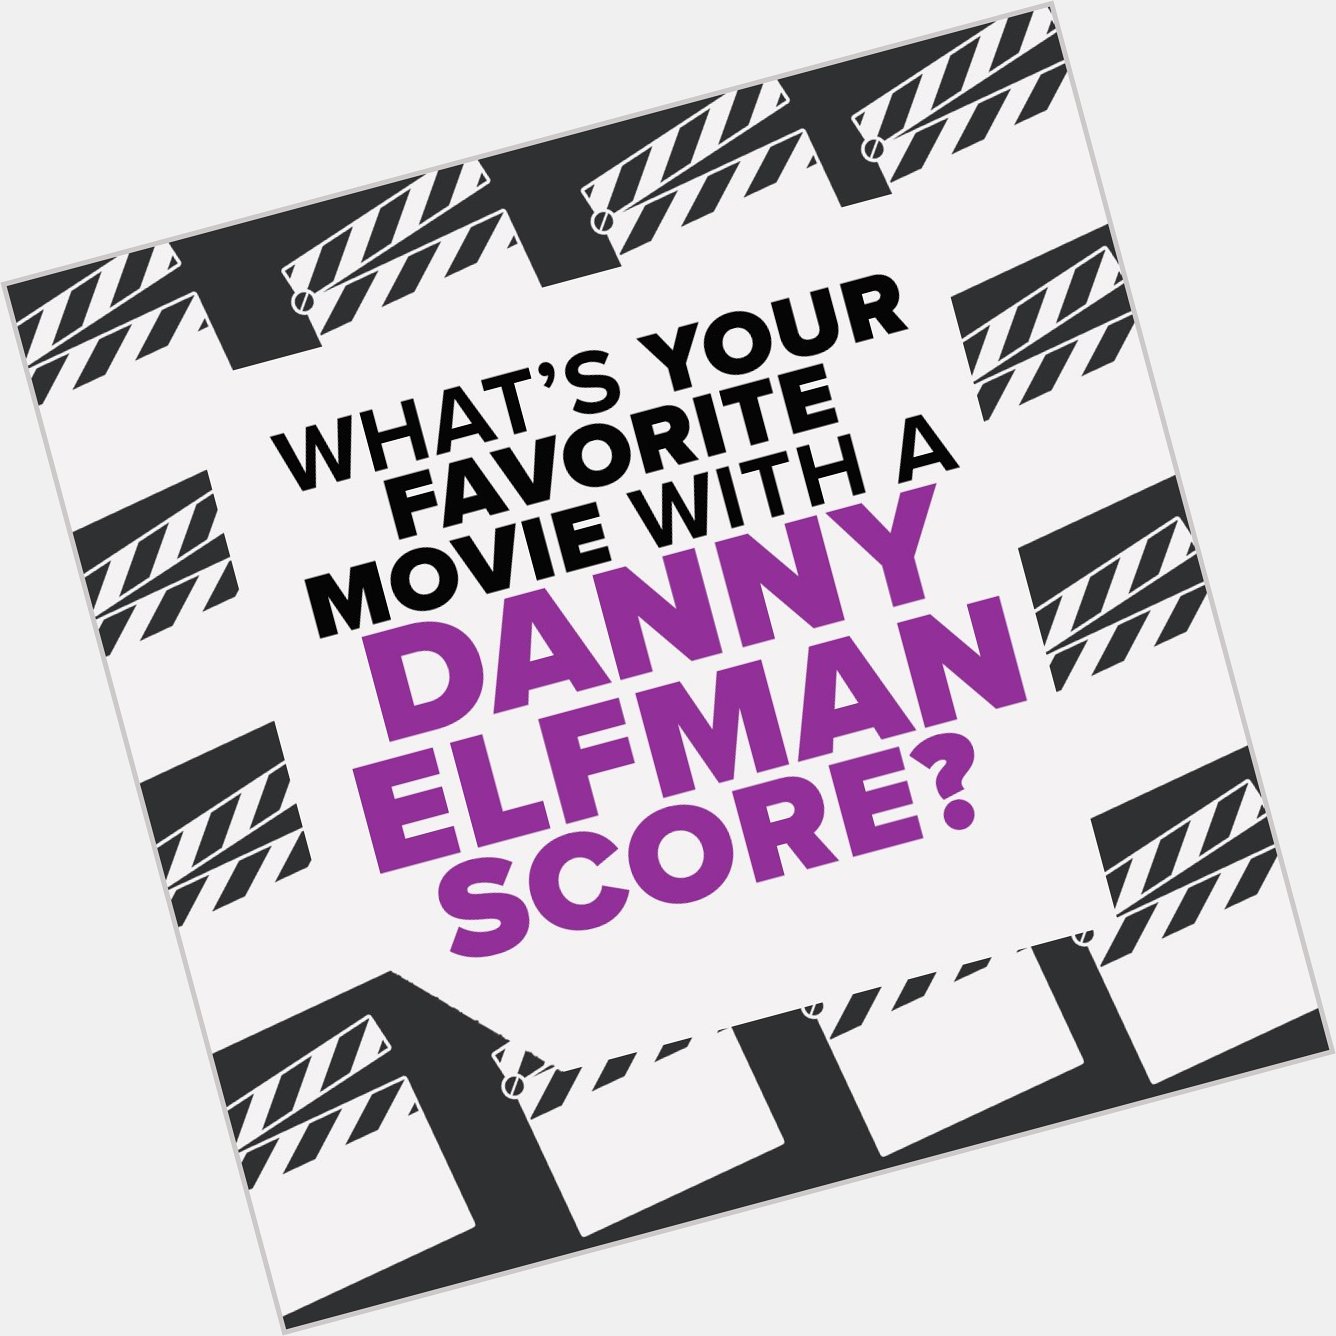 Happy Birthday Danny Elfman! 